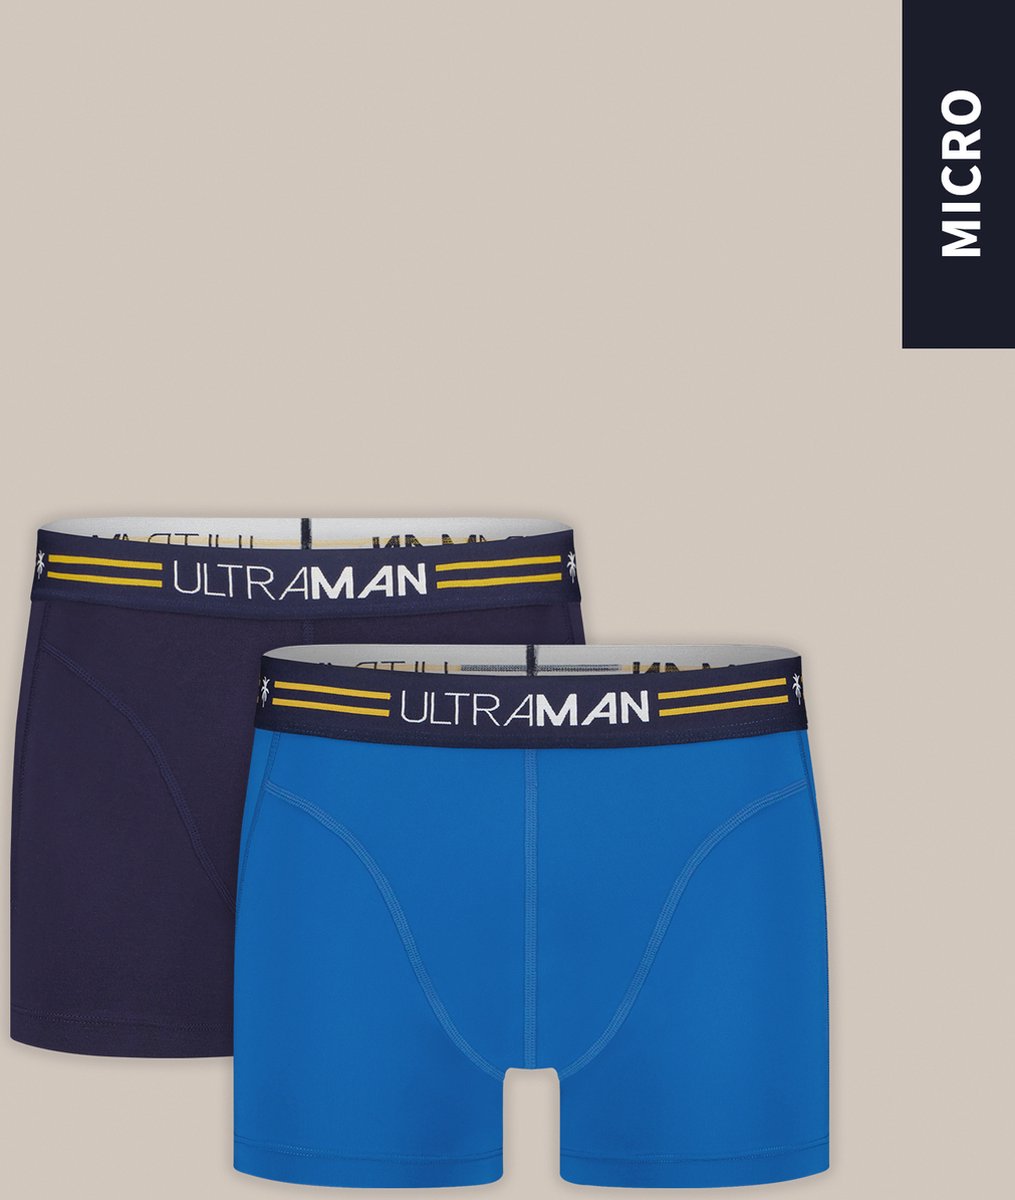 Sapph & Ultraman - 2-pack boxershort heren / ondergoed heren - Blauw - Microstof - Sneldrogend - M